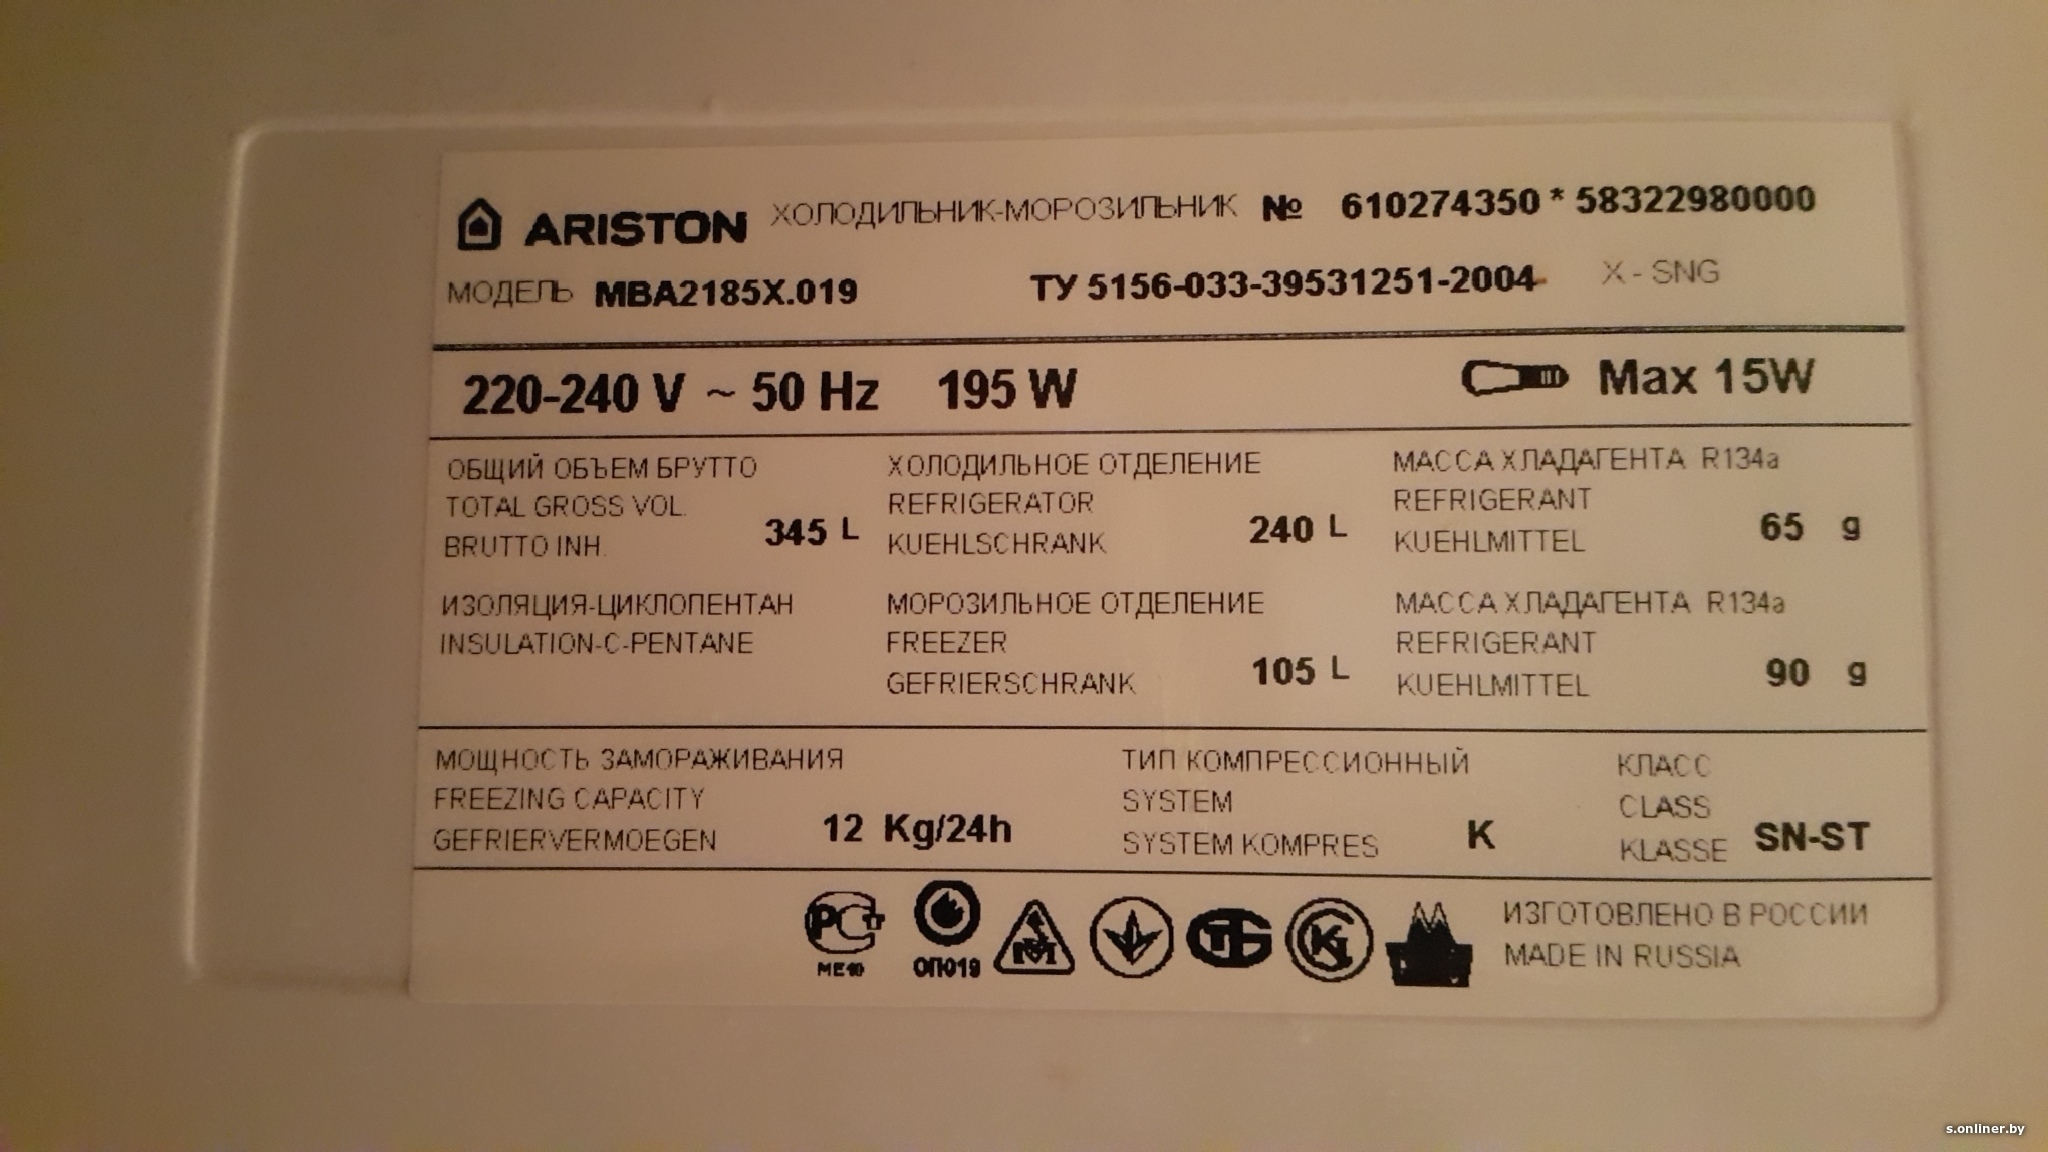 Компрессор ariston. Аристон шильдик r134. Характеристика холодильника Hotpoint Ariston. Холодильник Аристон МВА 2185.019. Hotpoint Ariston холодильник Потребляемая мощность.